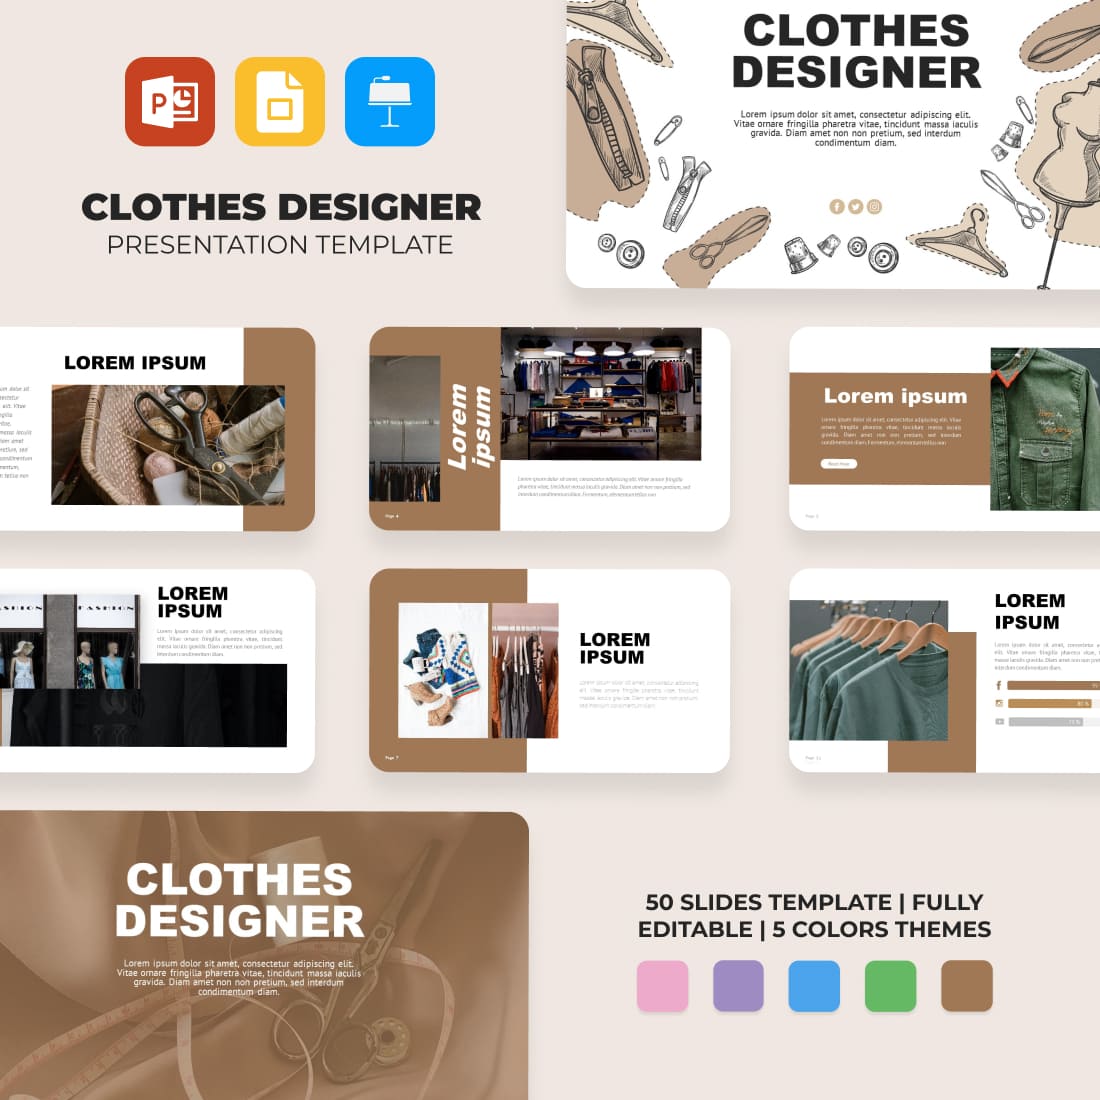 Clothes Designer Fashion Presentation template cover.